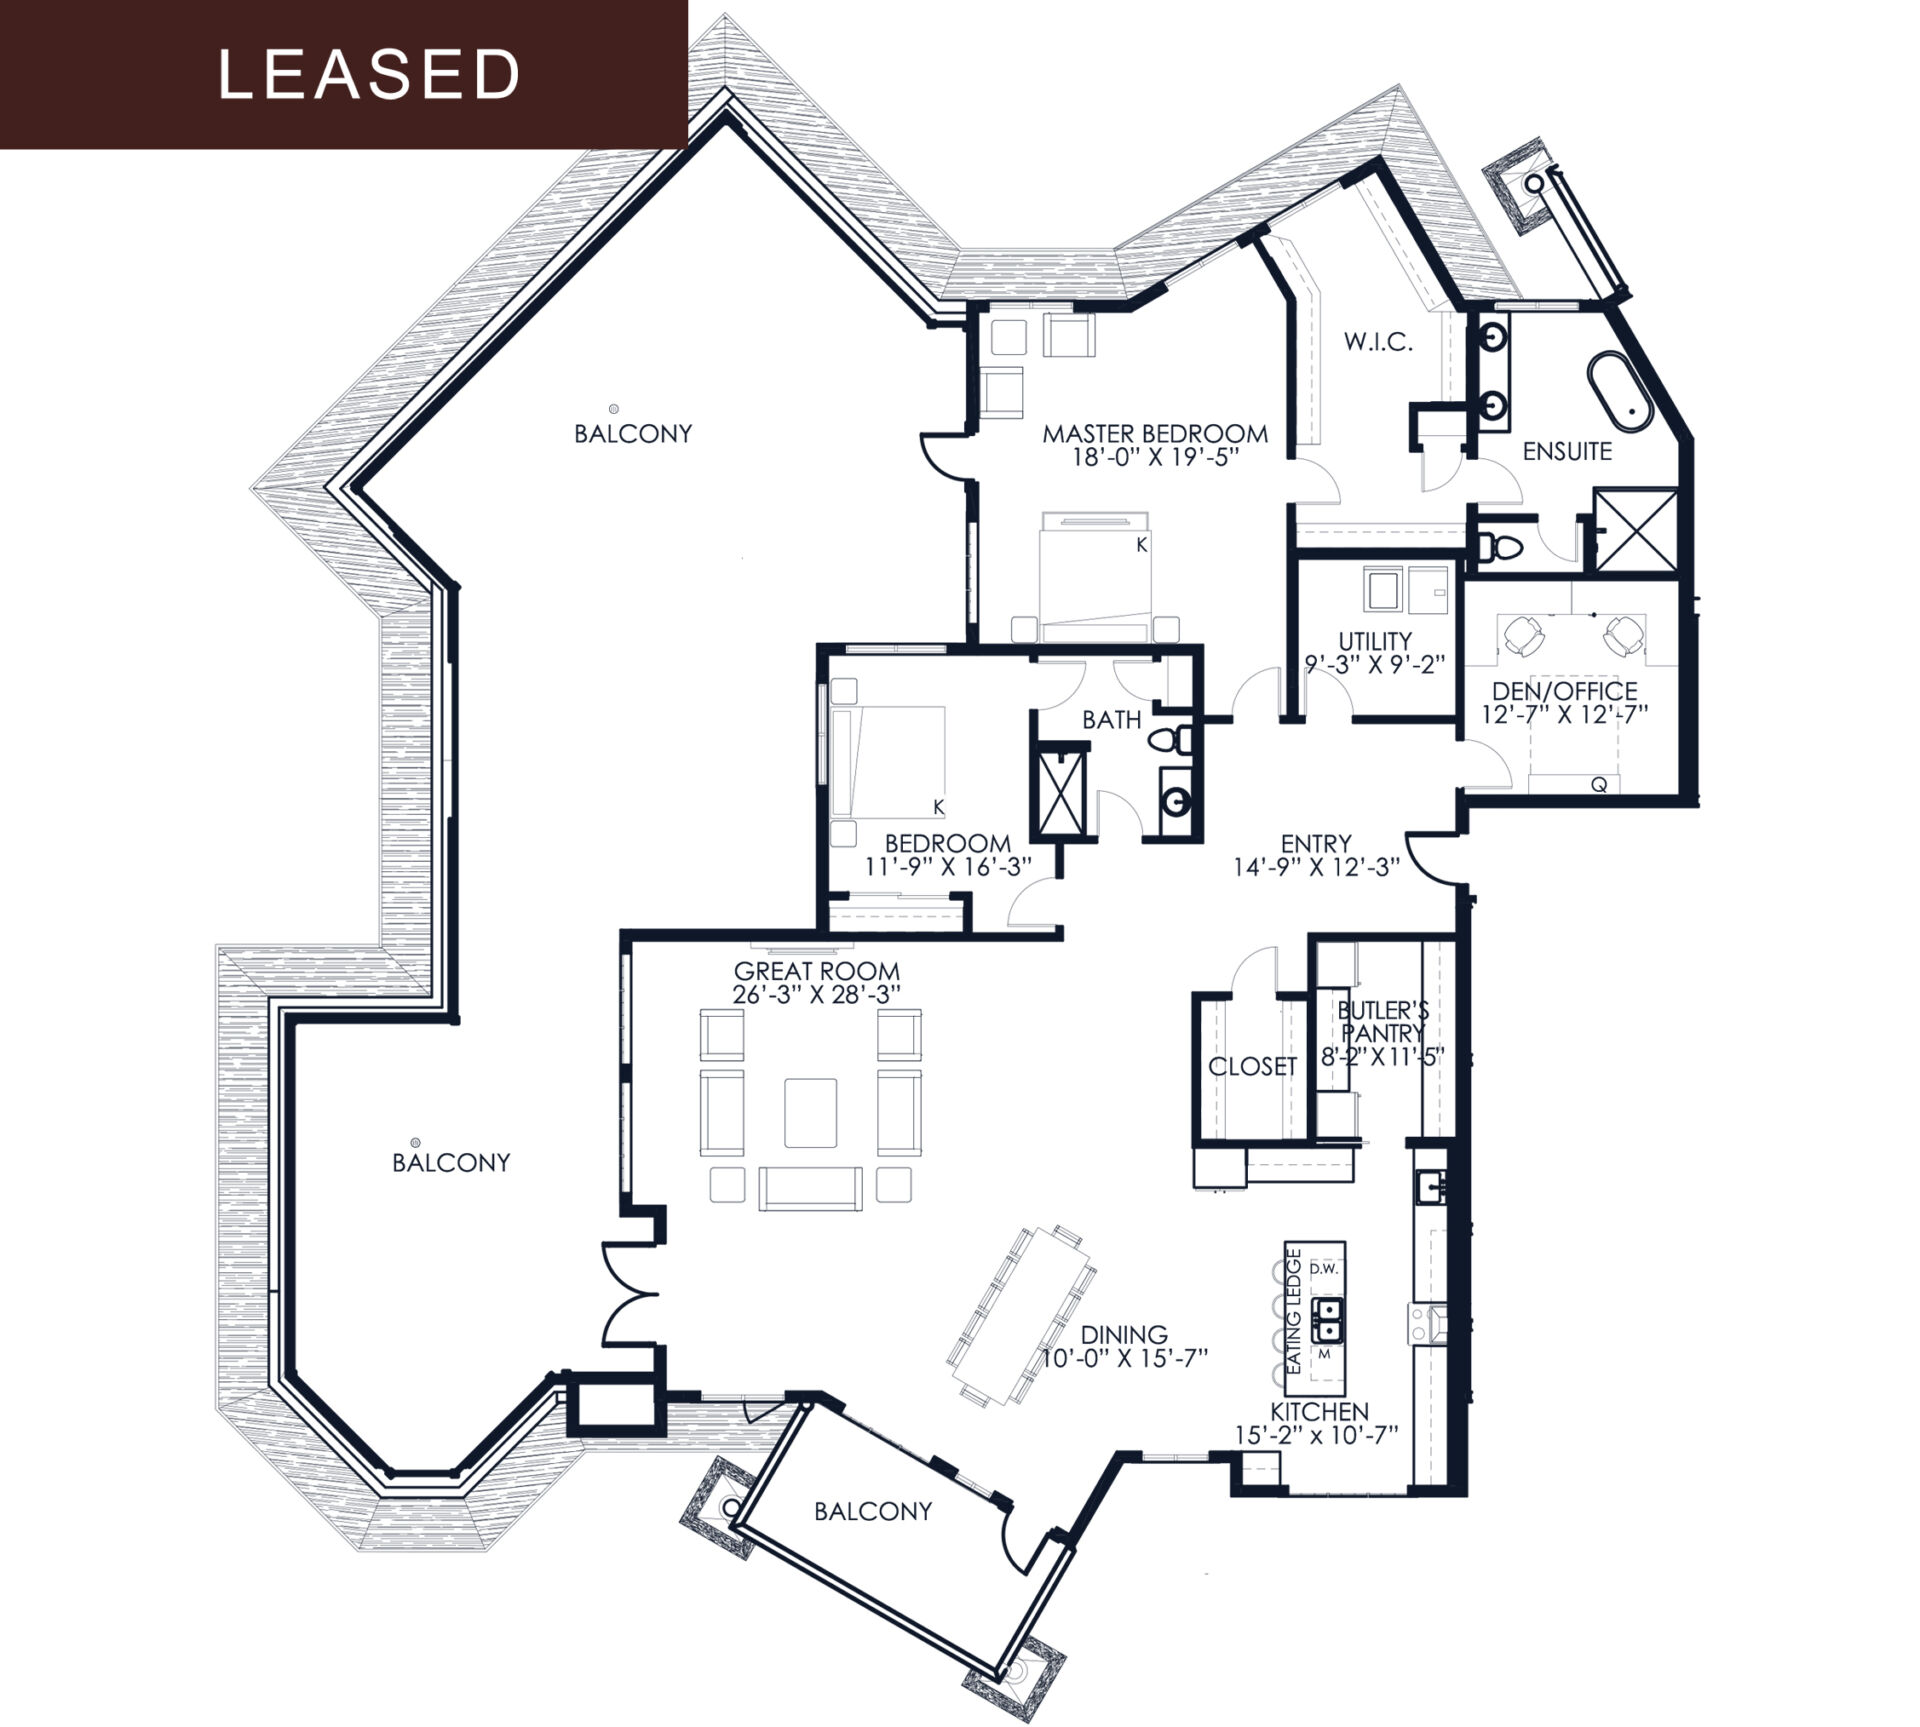 Unit A412 floor plan